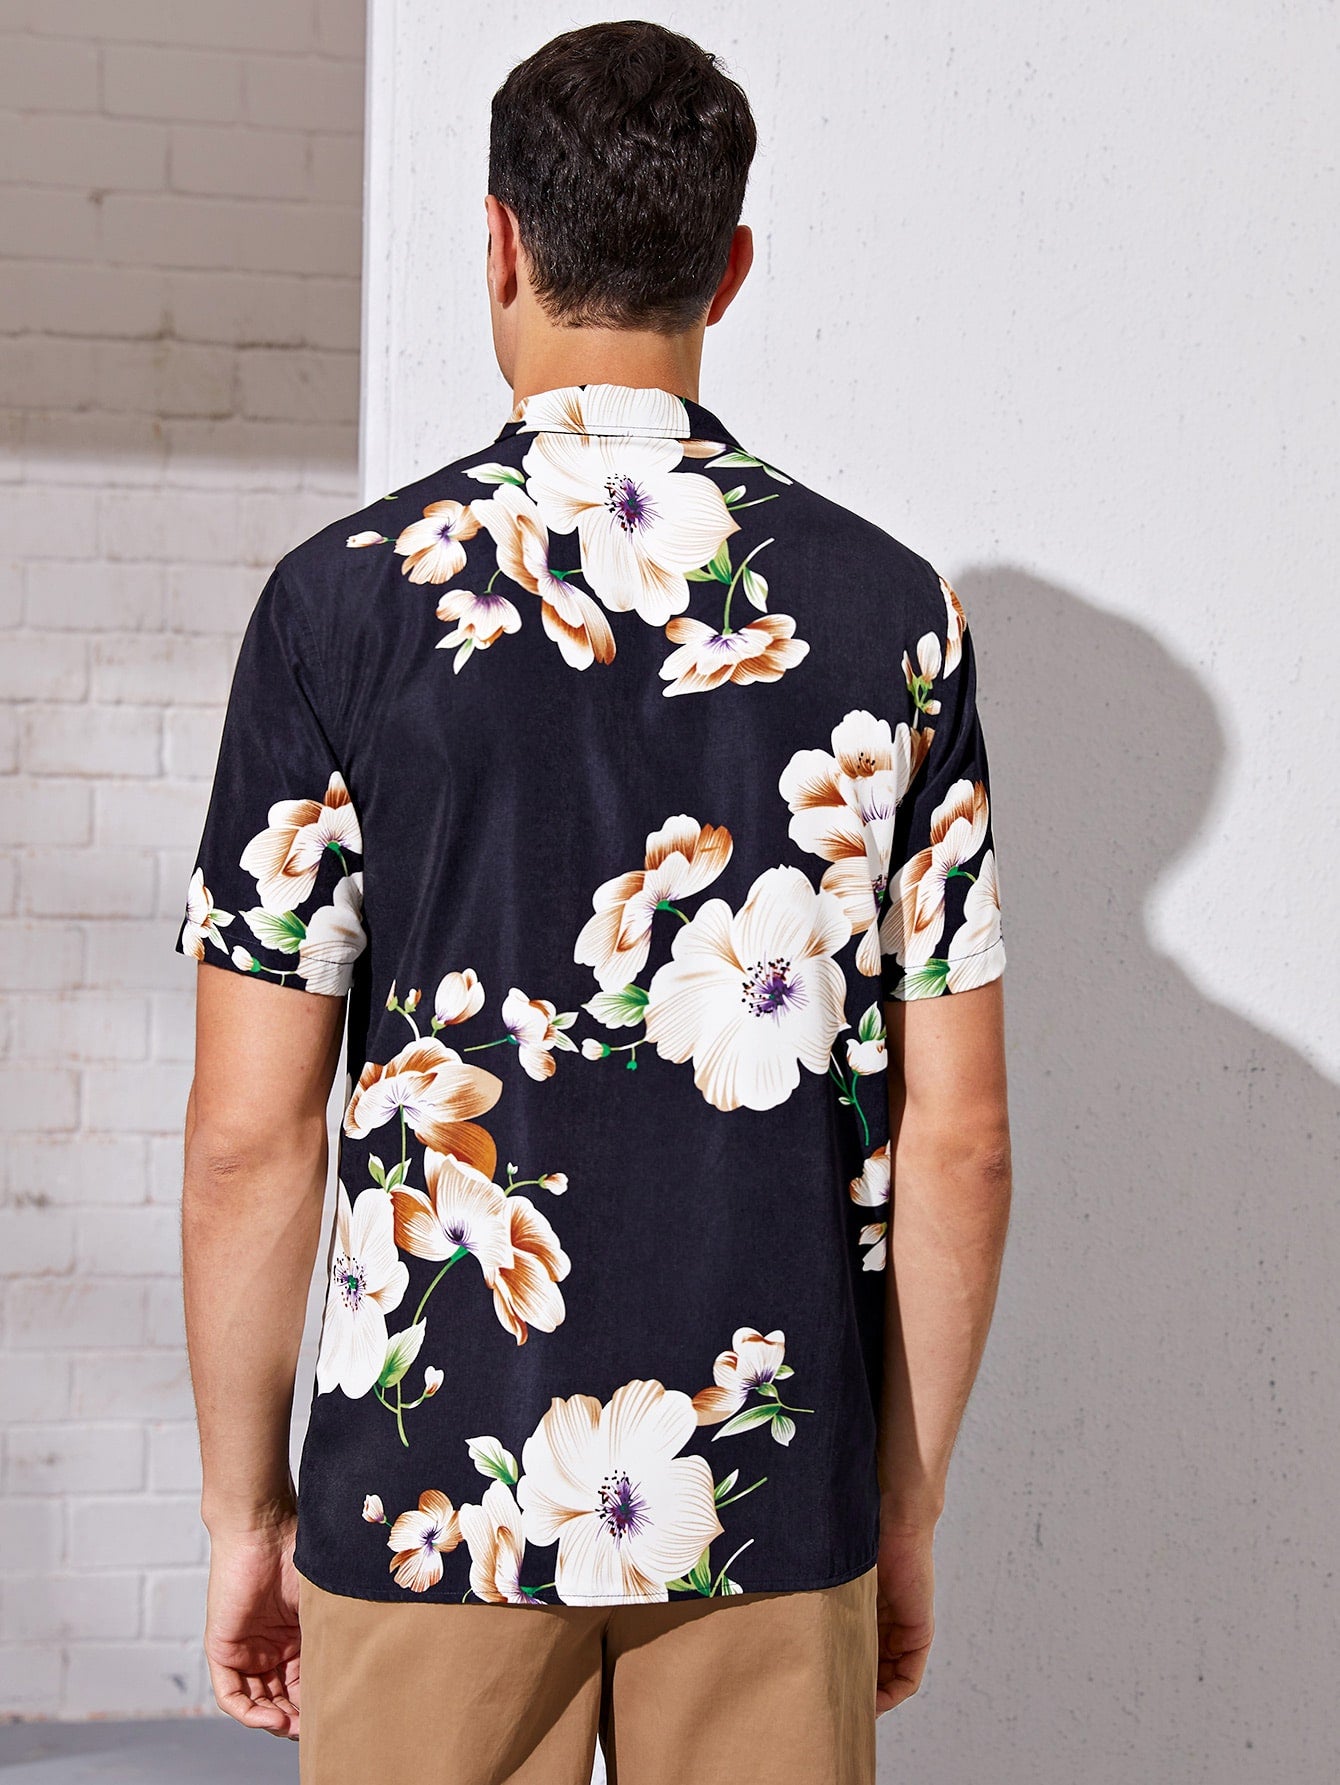 Men Floral Print Shirt